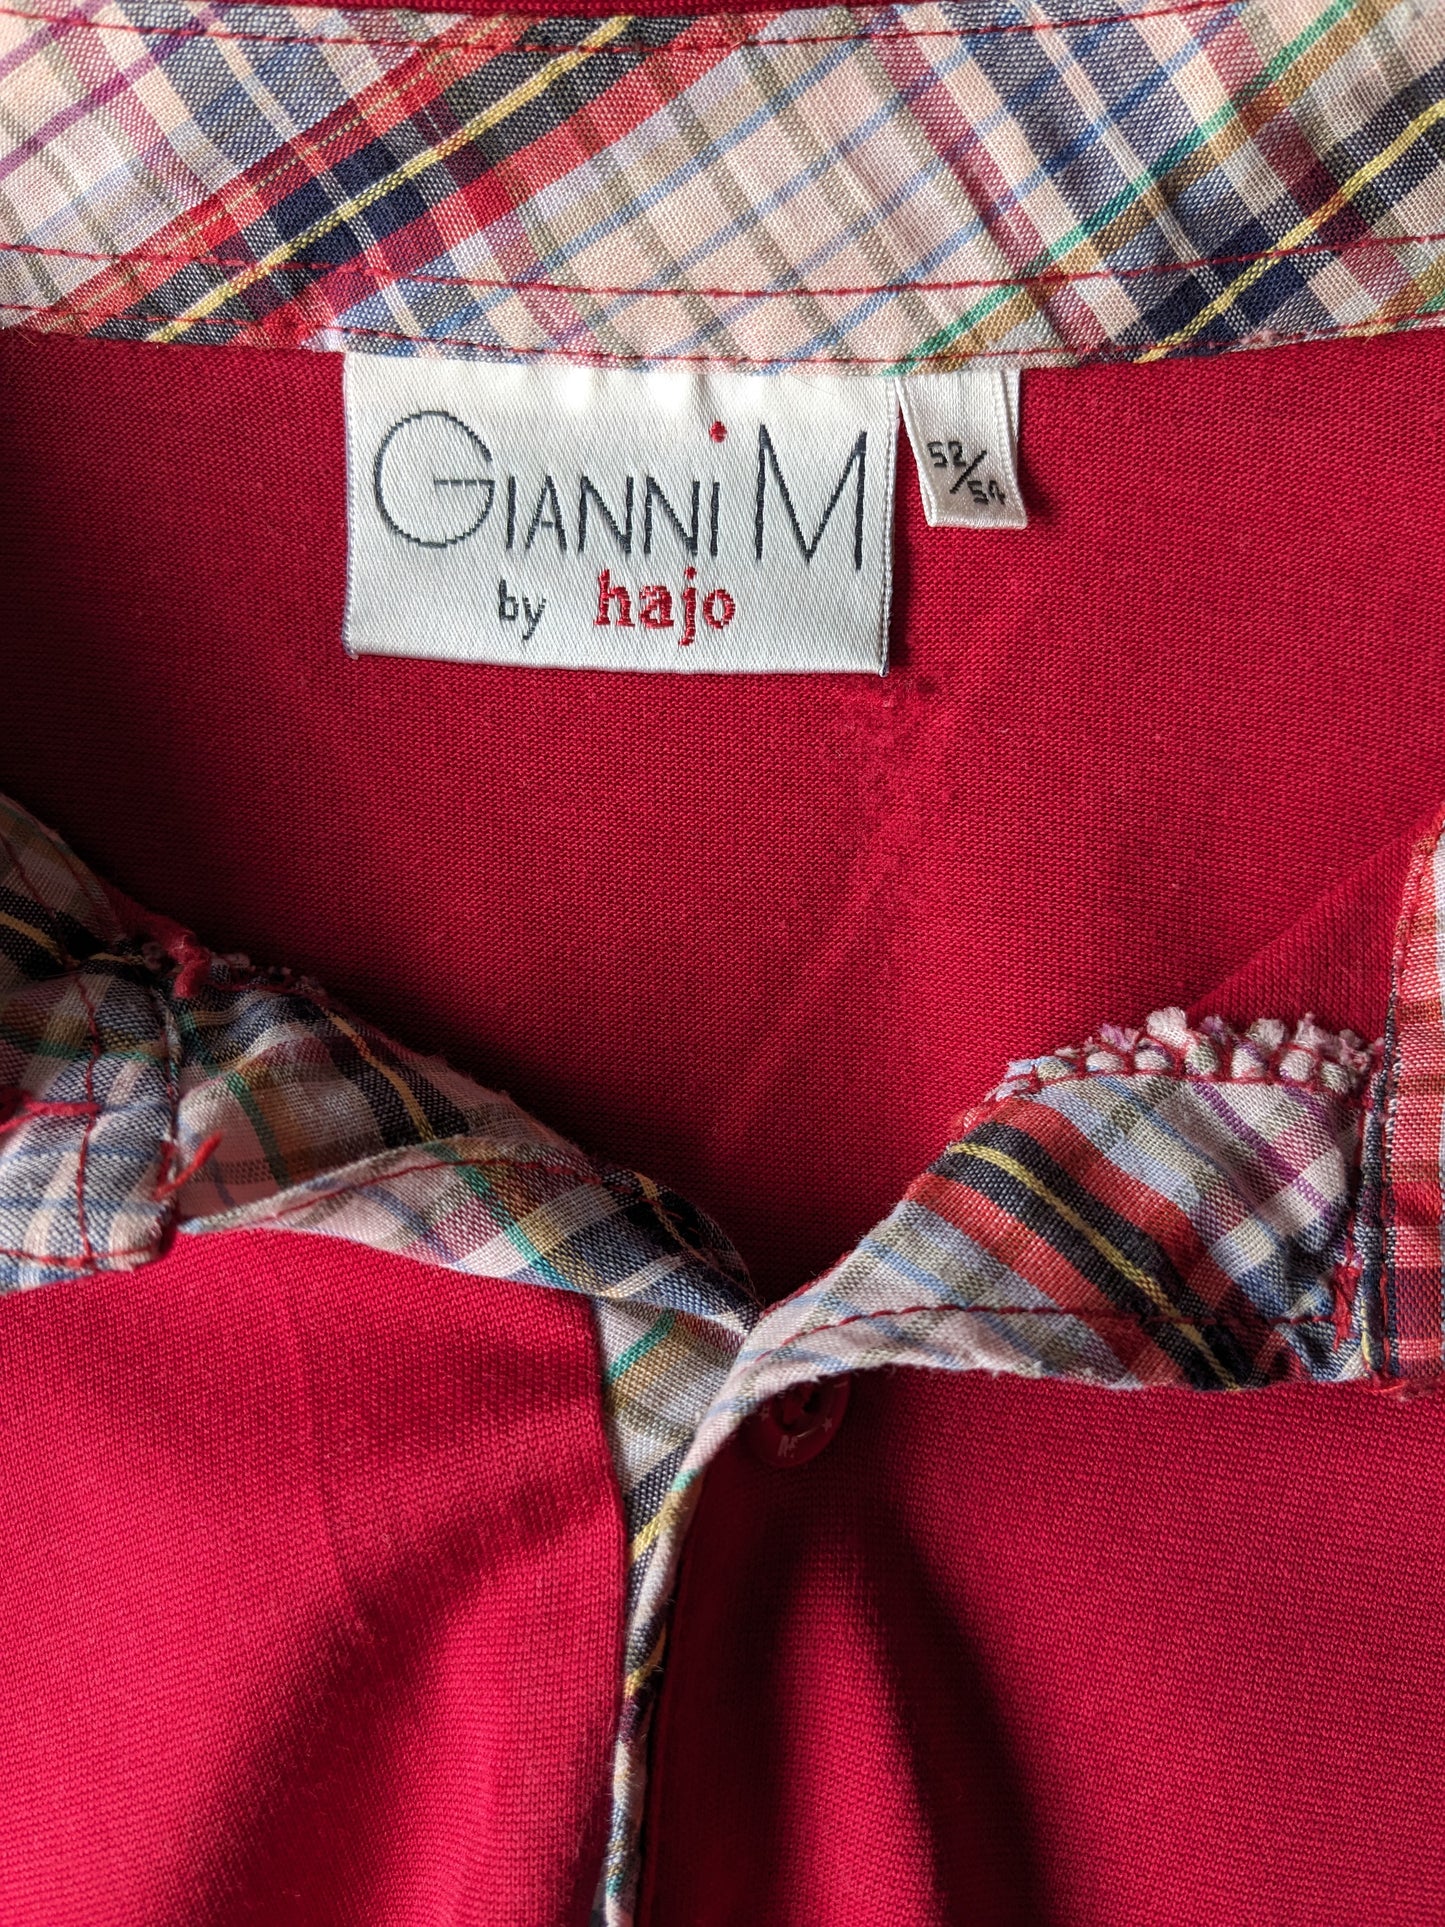 Gianni M by Hajo vintage polo met elastische band. Rood gekleurd. Maat L / XL.